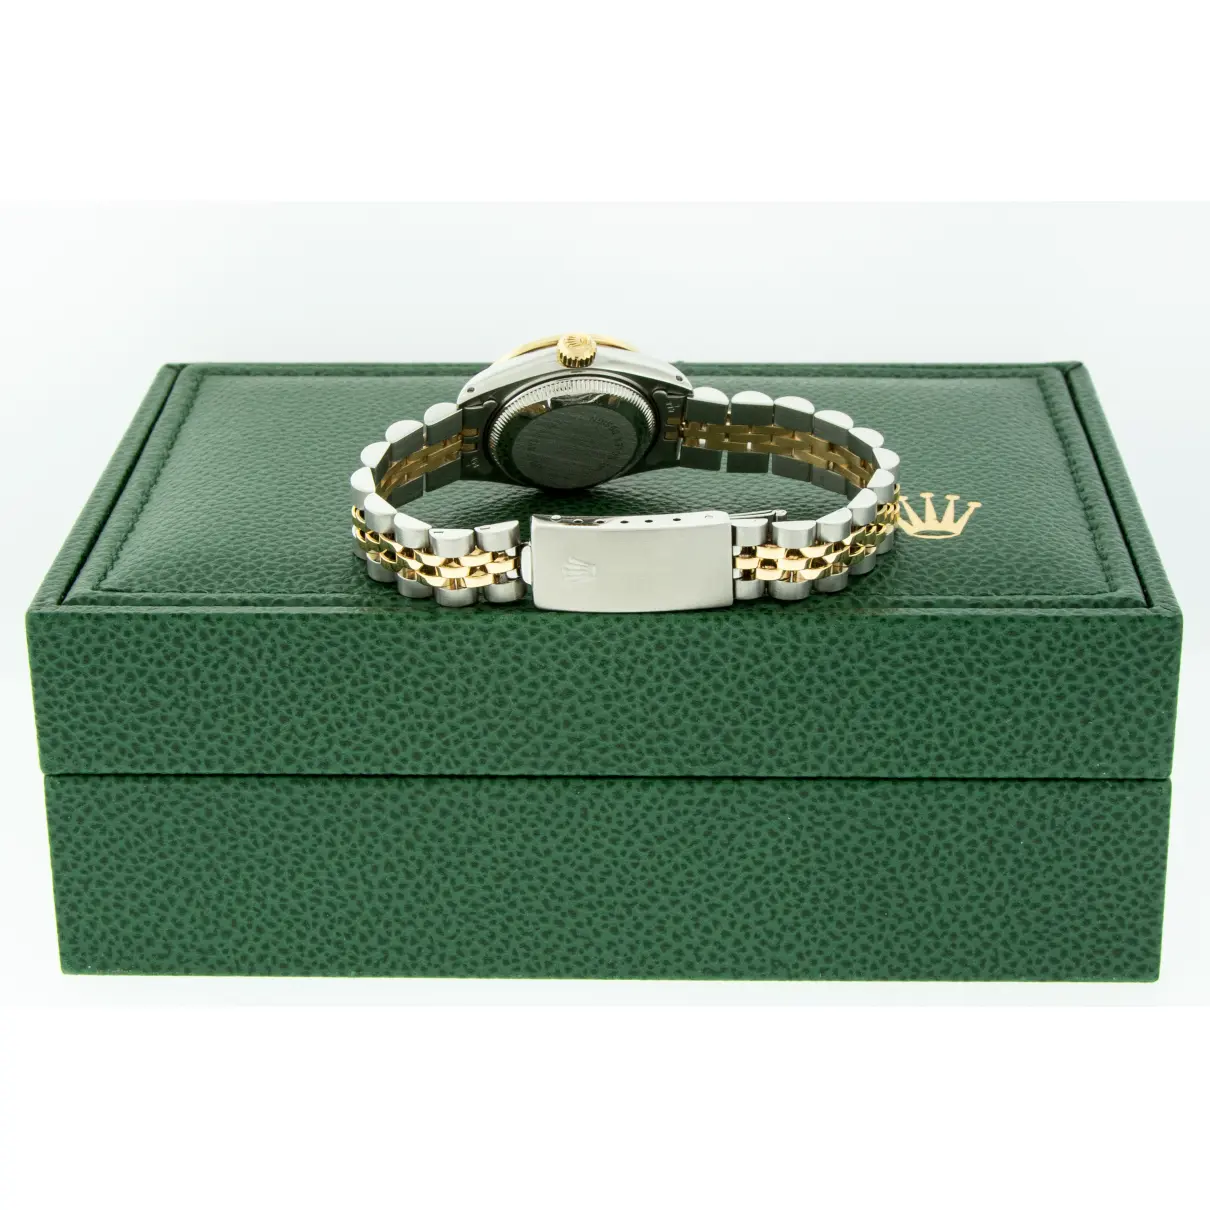 Buy Rolex Lady DateJust 26mm watch online - Vintage